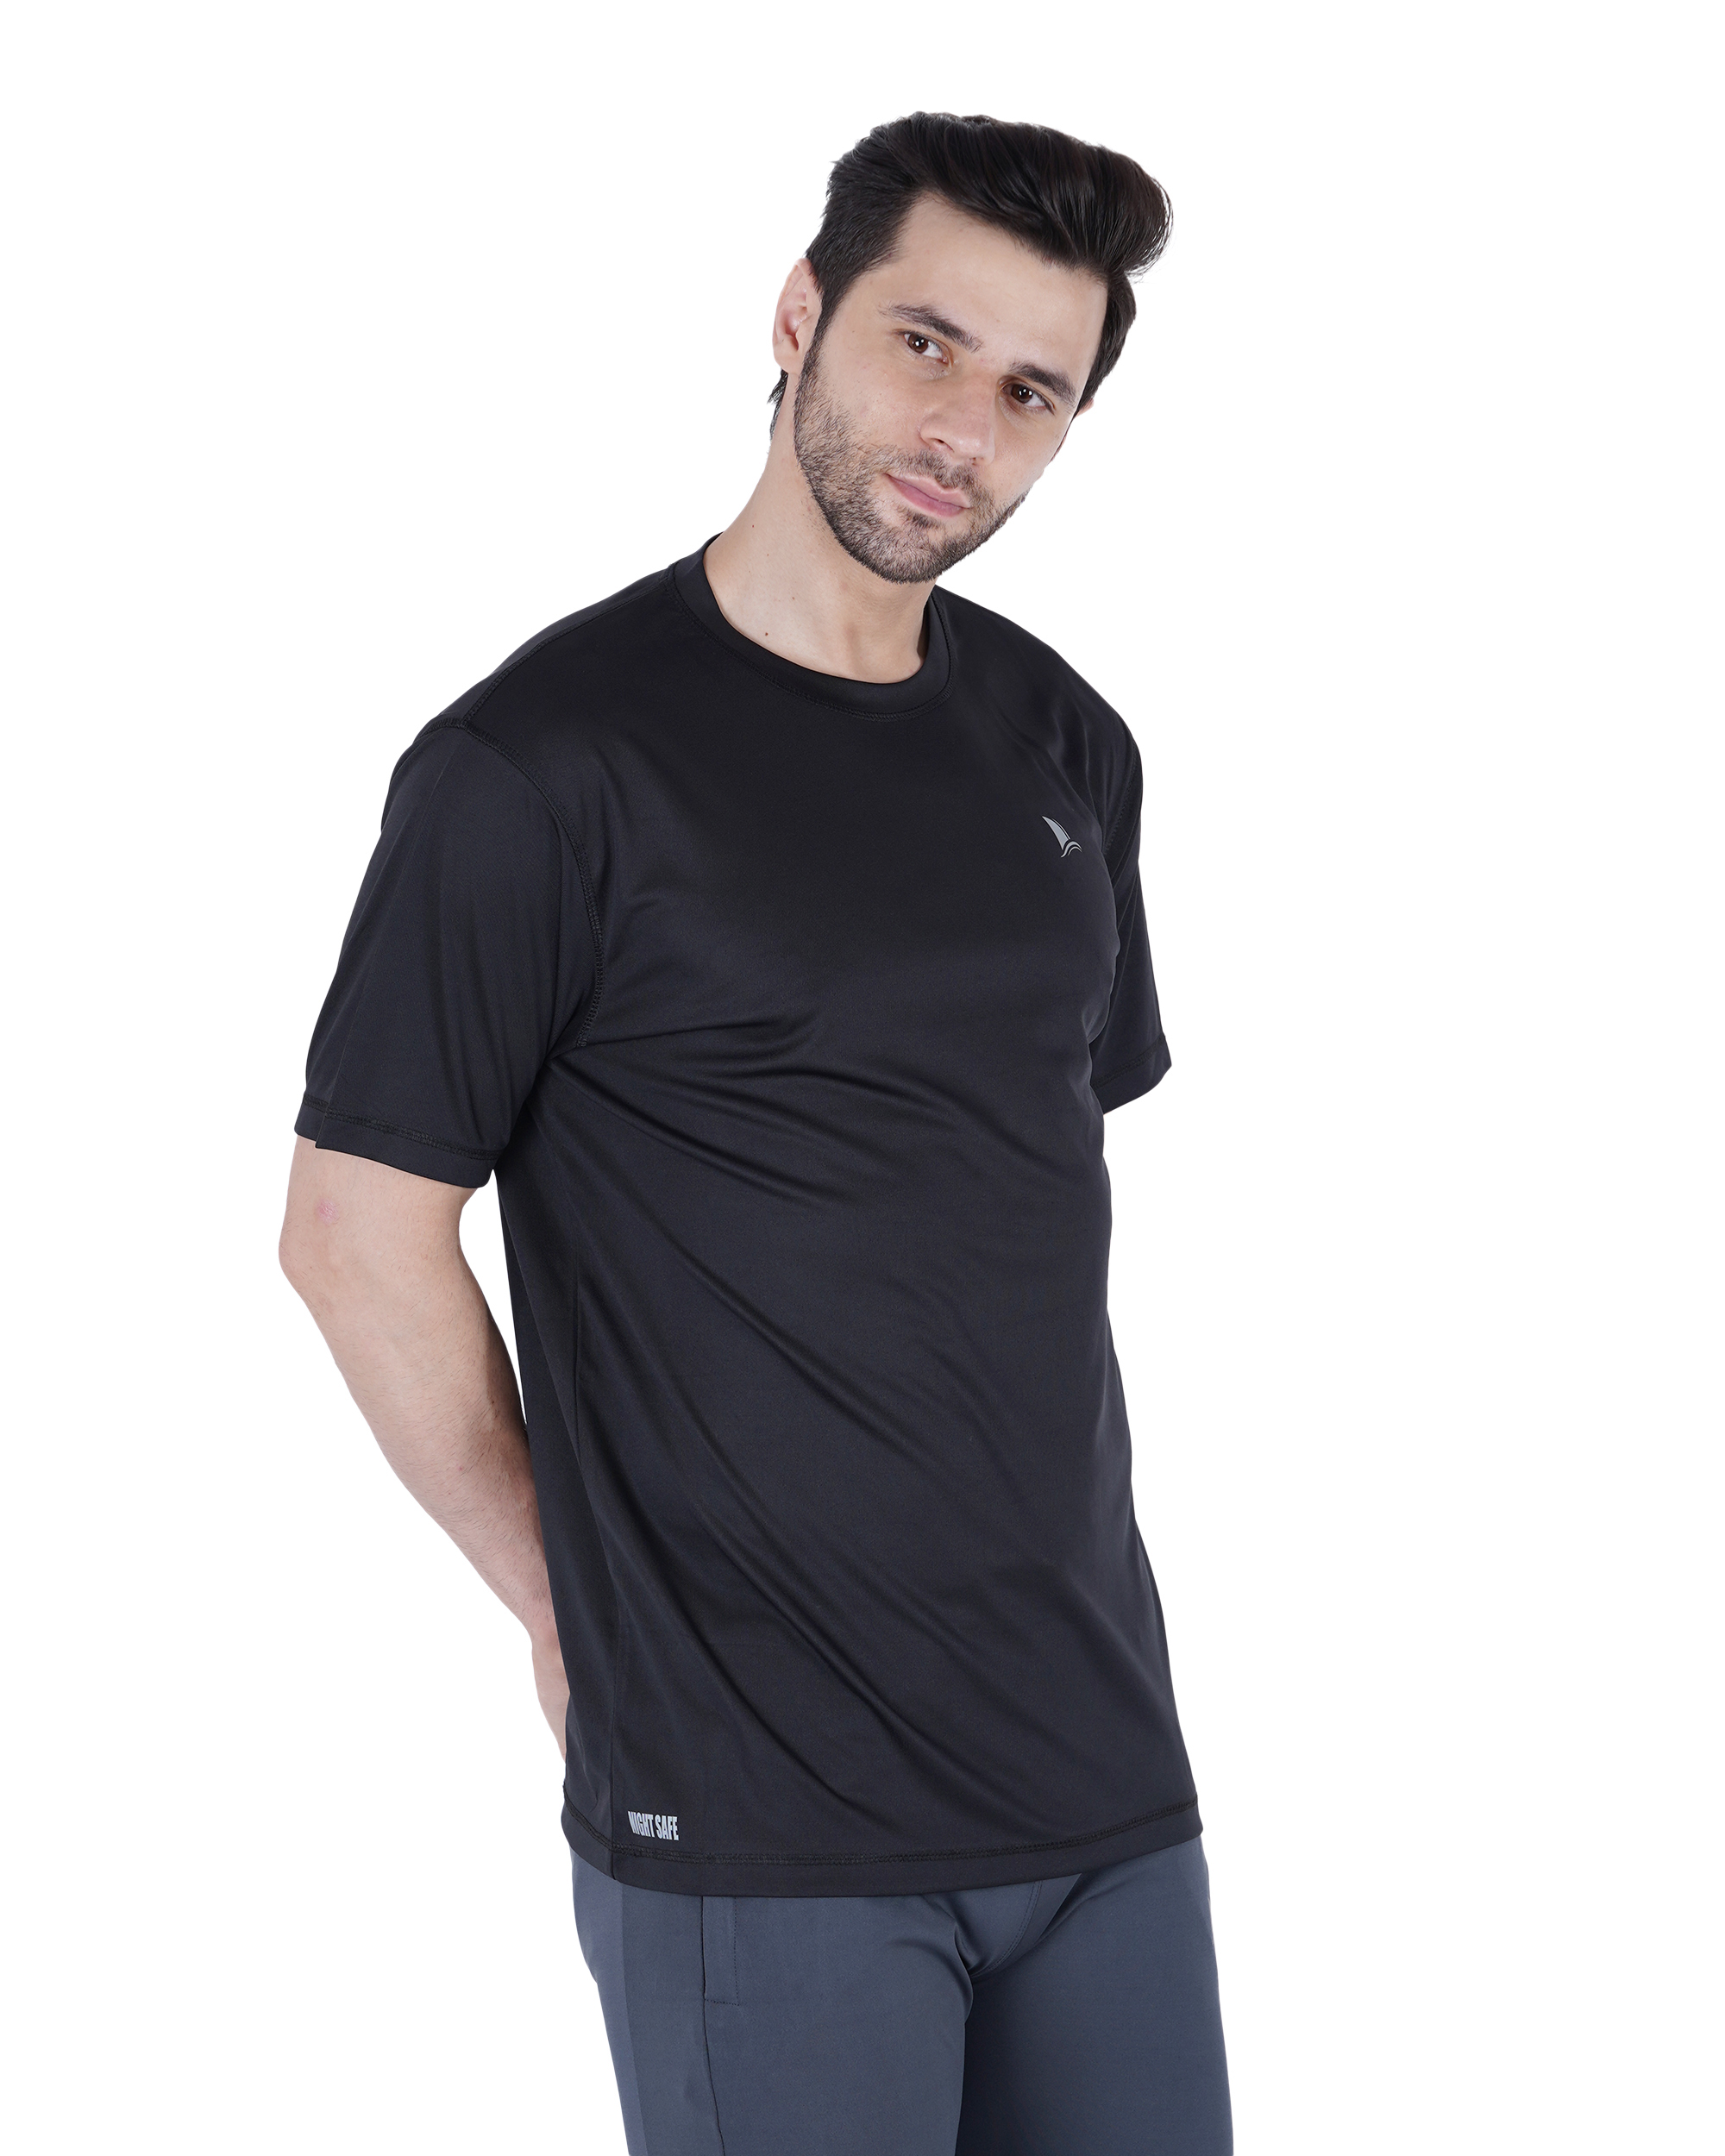 Hexarel Active Wear Tshirt - Black | Navyfit